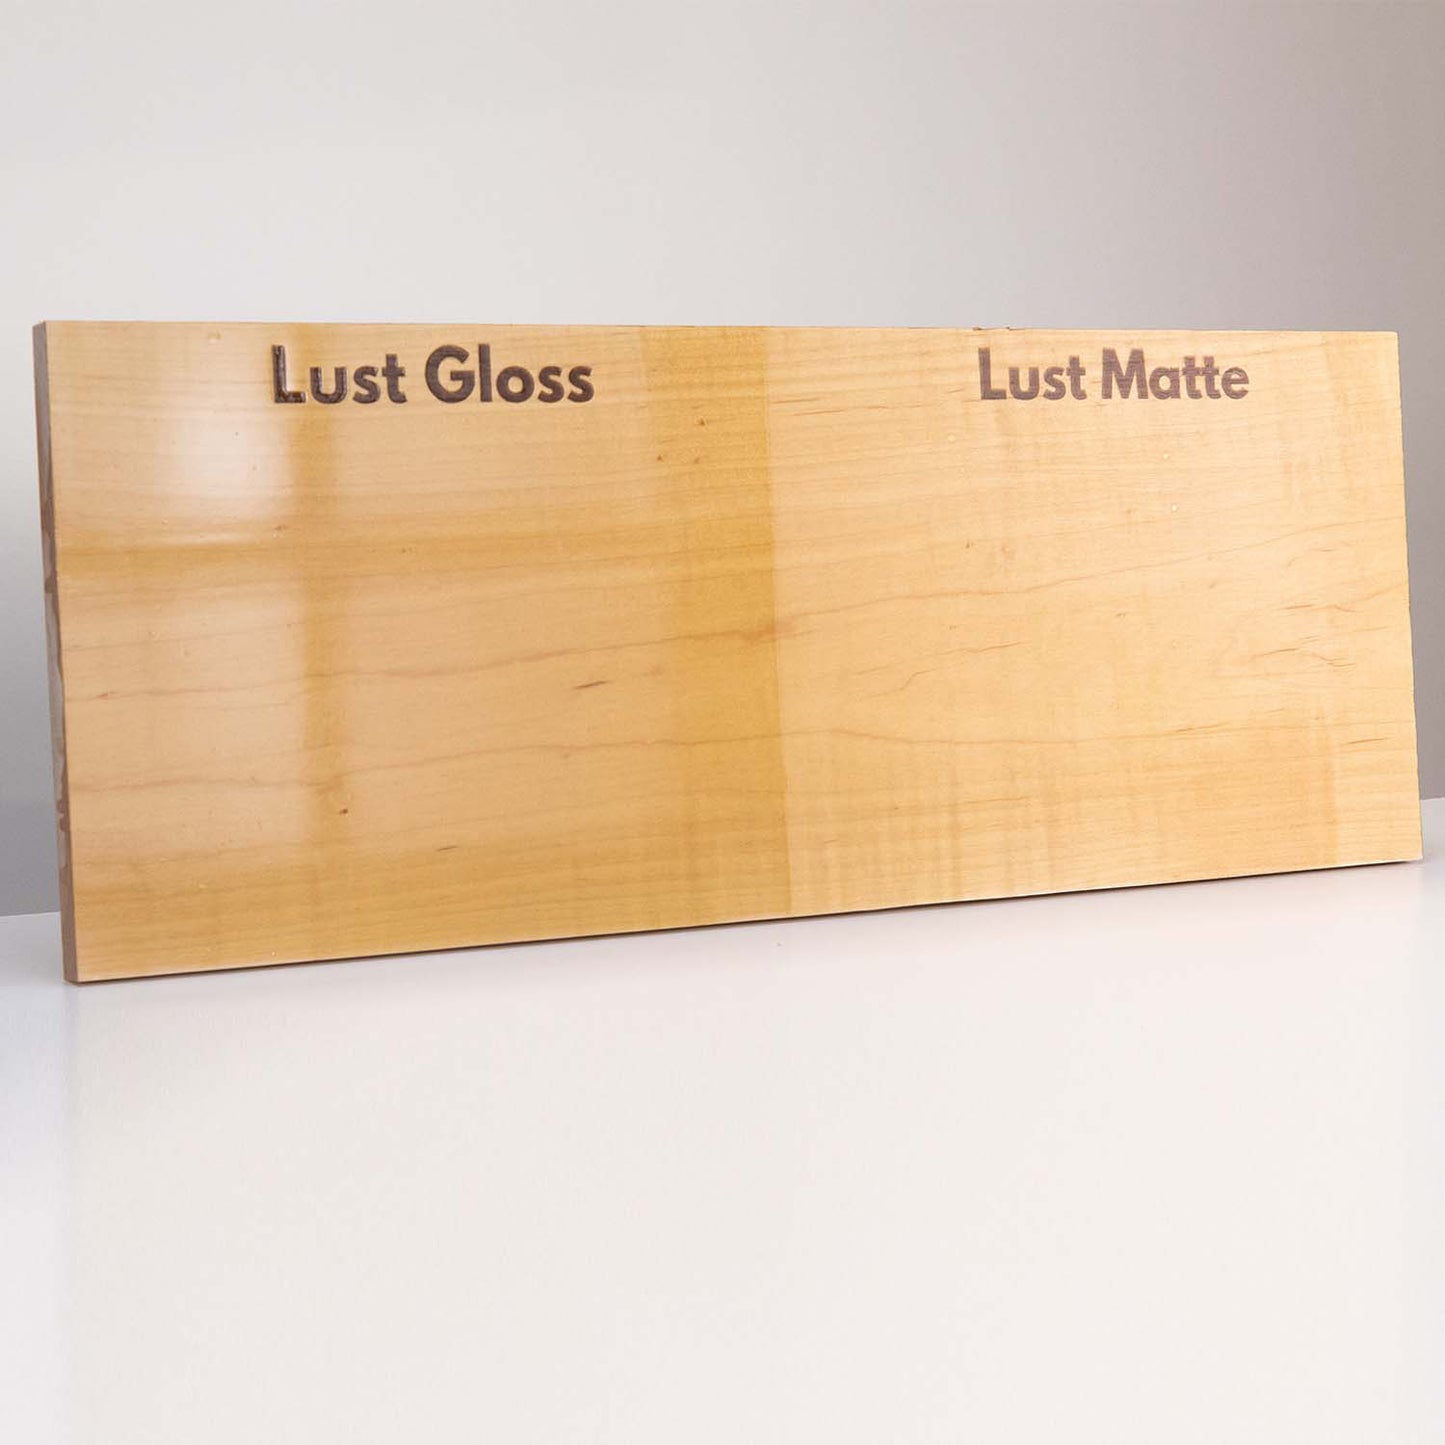 TotalBoat Lust: Lust Gloss and Lust Matte